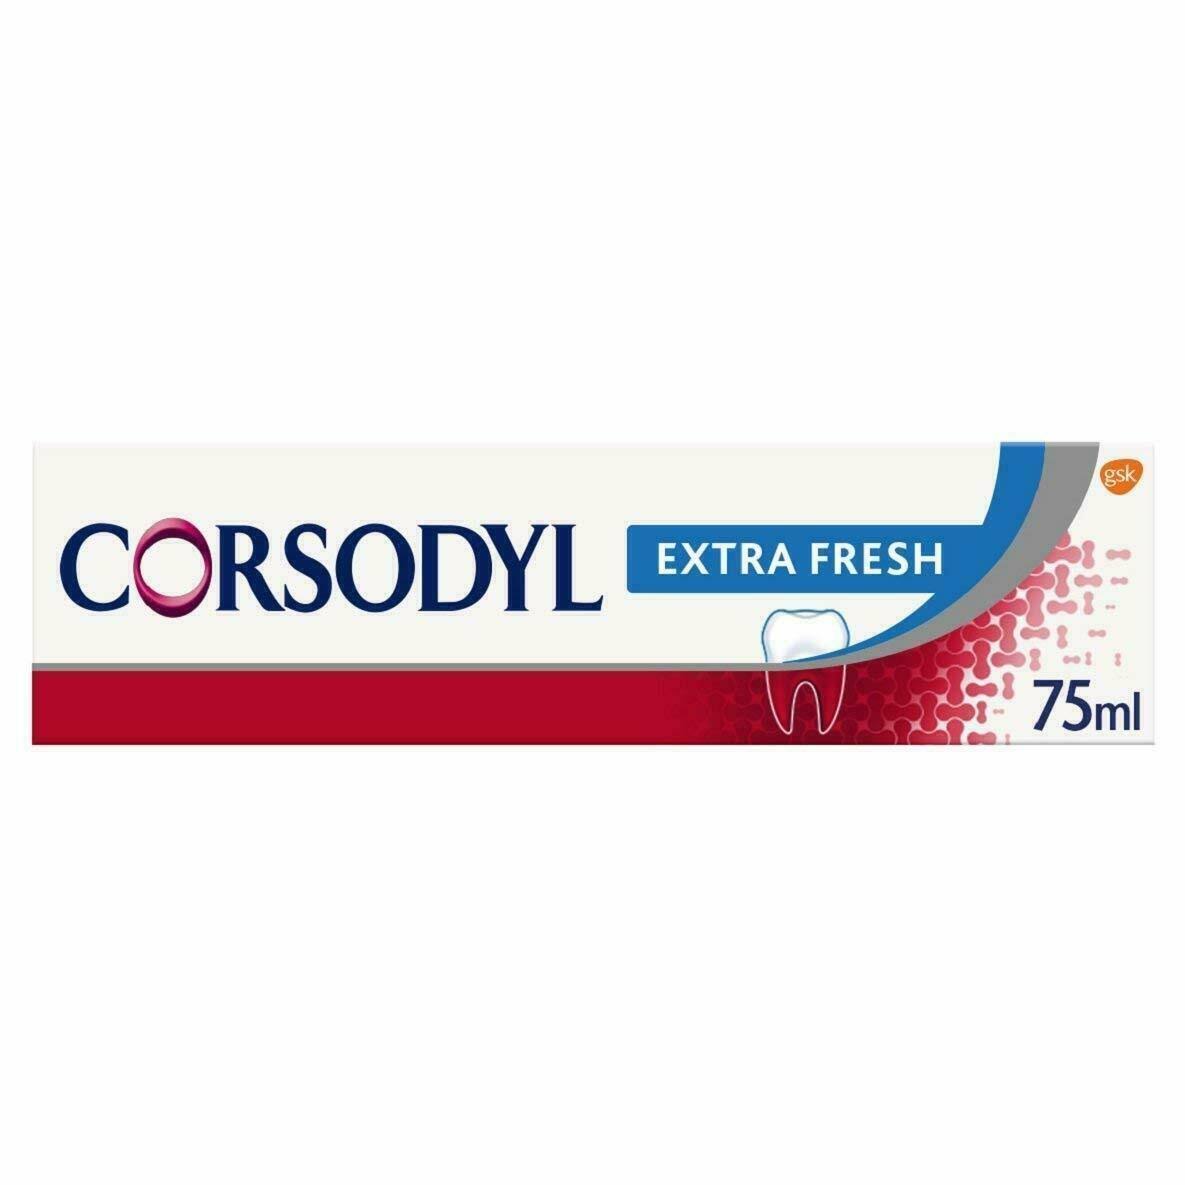 Corsodyl Toothpaste 75ml